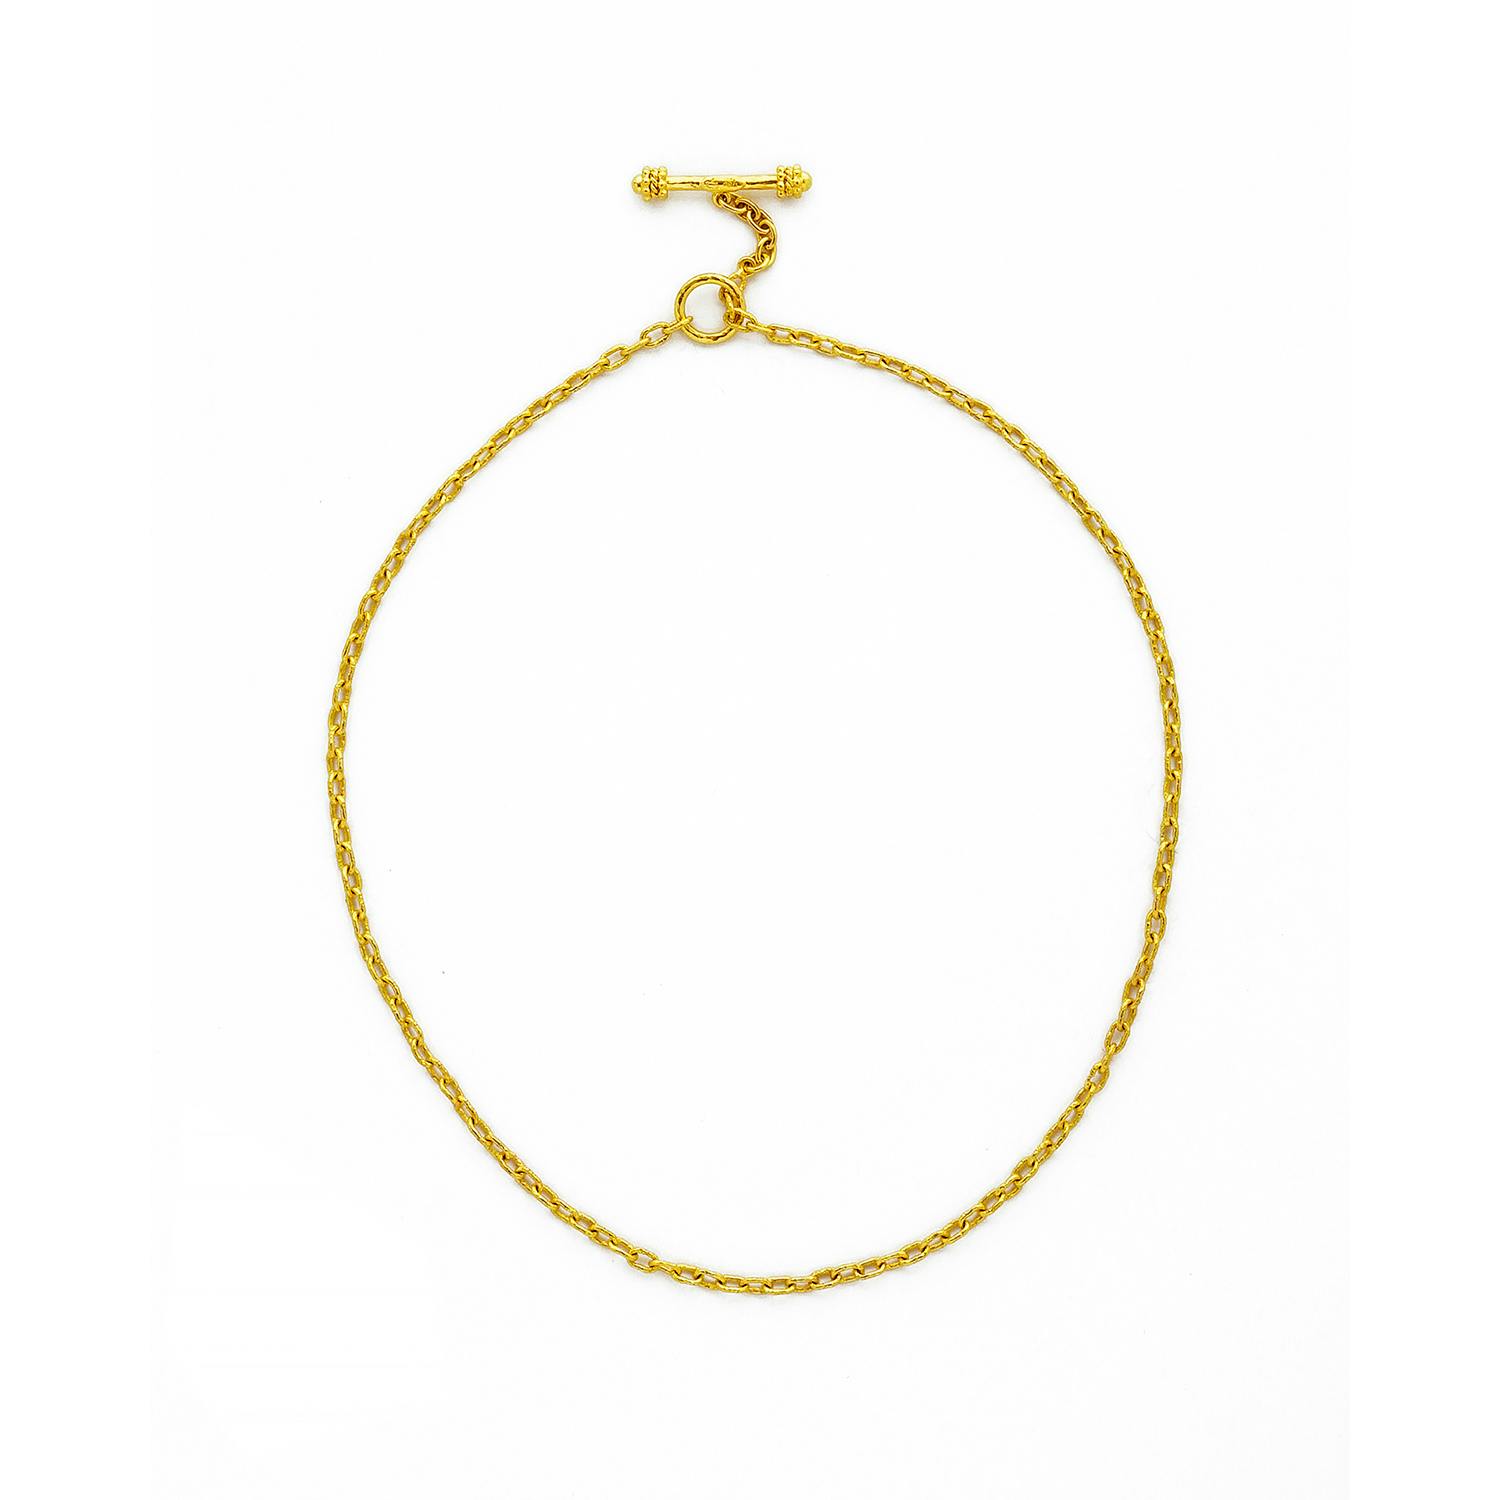 Elizabeth Locke Very Fine Gold Chain Necklace - 17" 